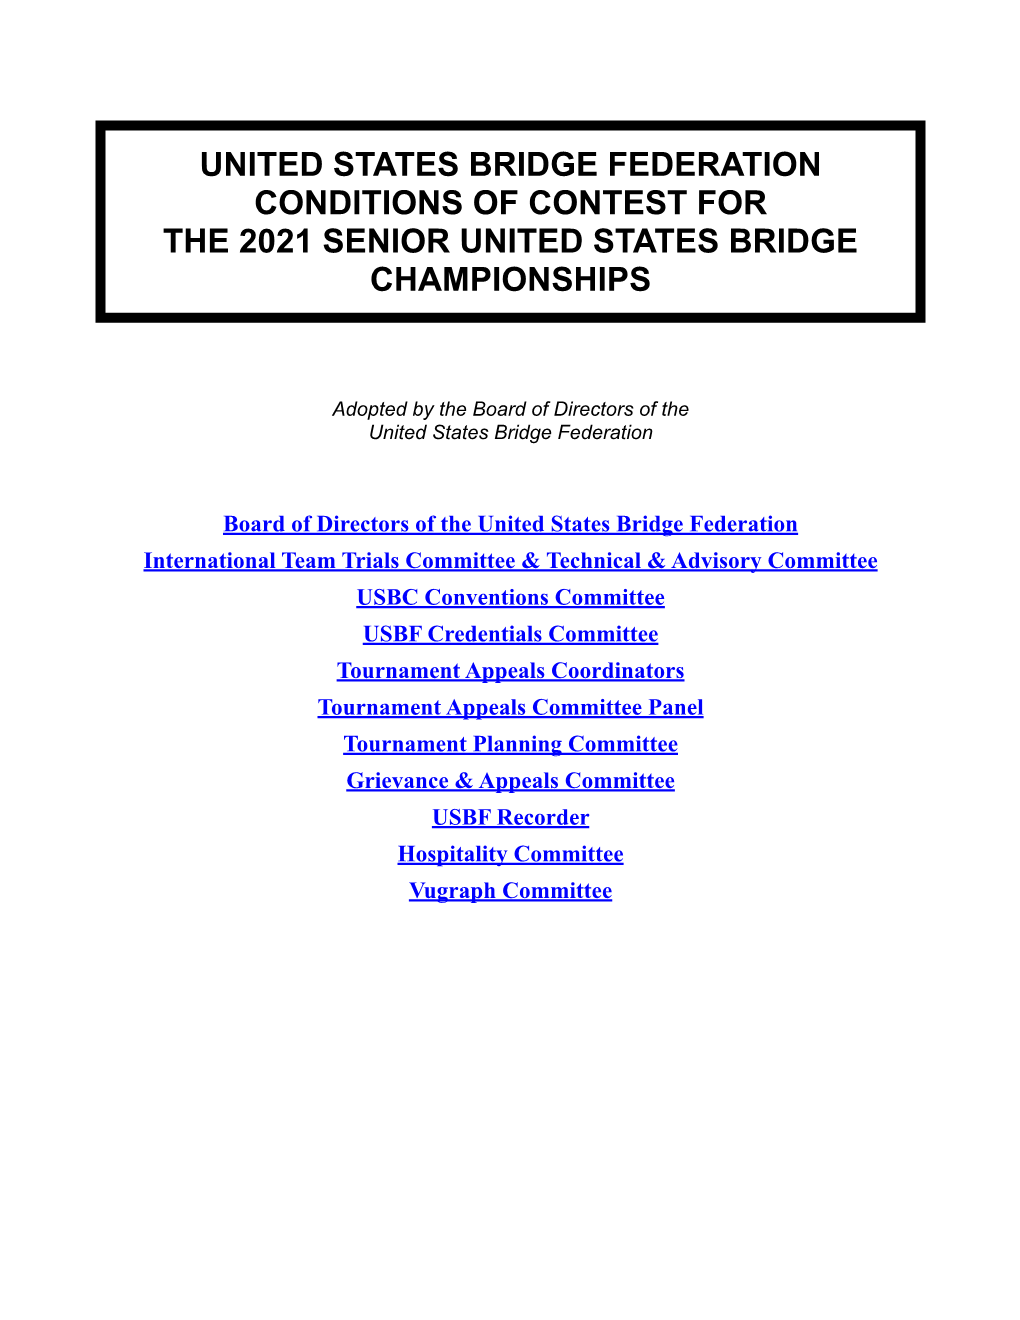 United States Bridge Federation Conditions of Contest for the 2021 Senior United States Bridge Championships